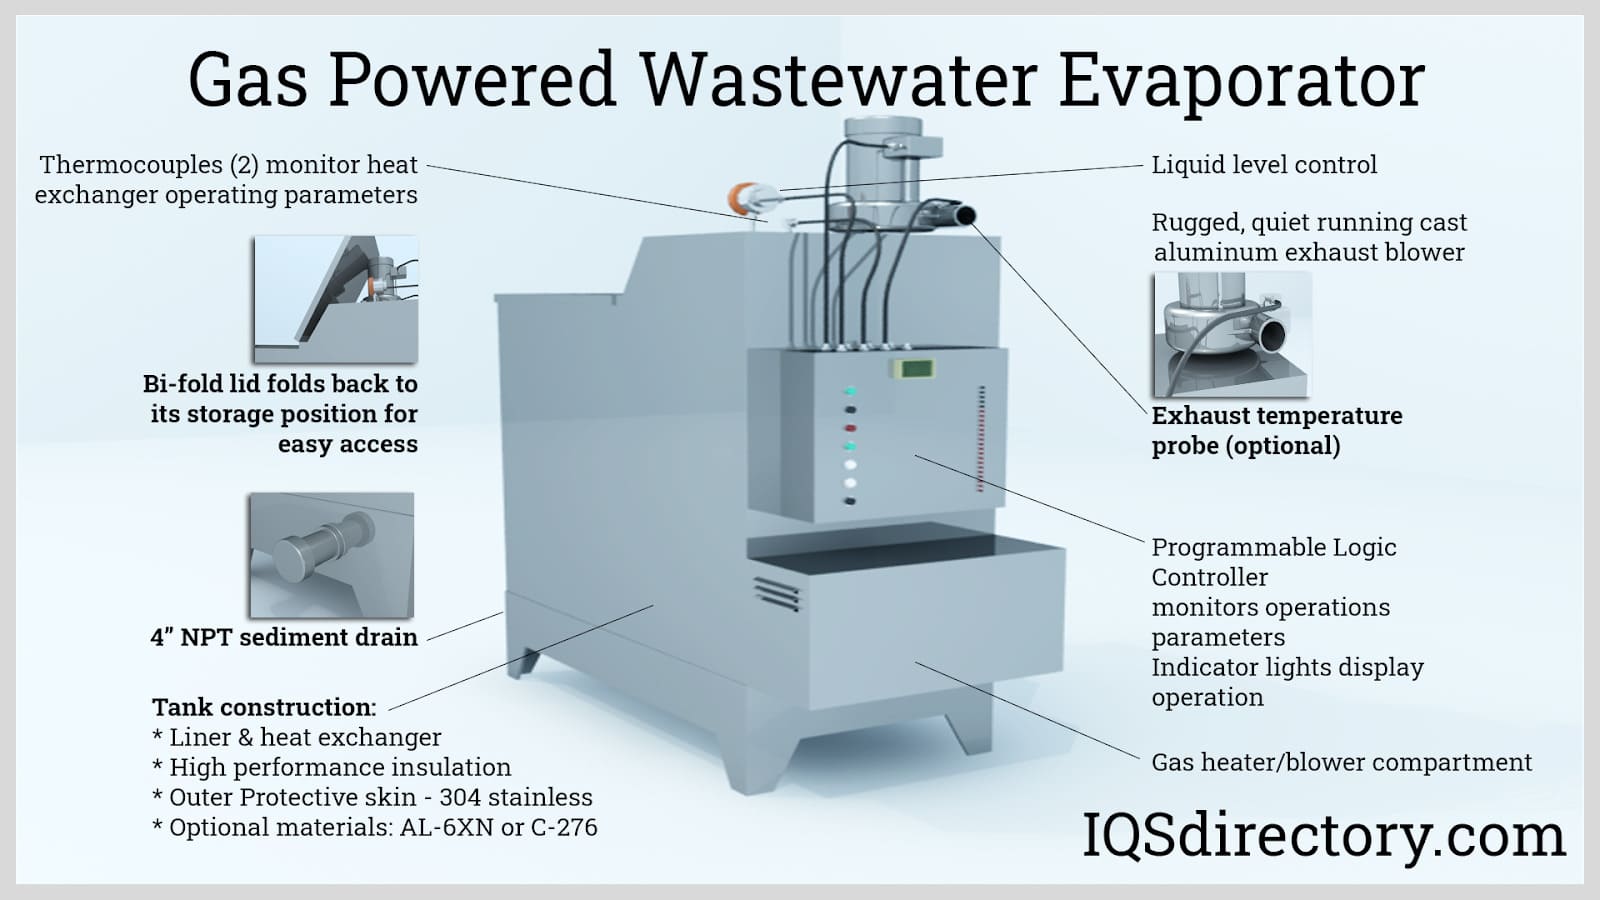 Gas Powered Wastewater Evaporator